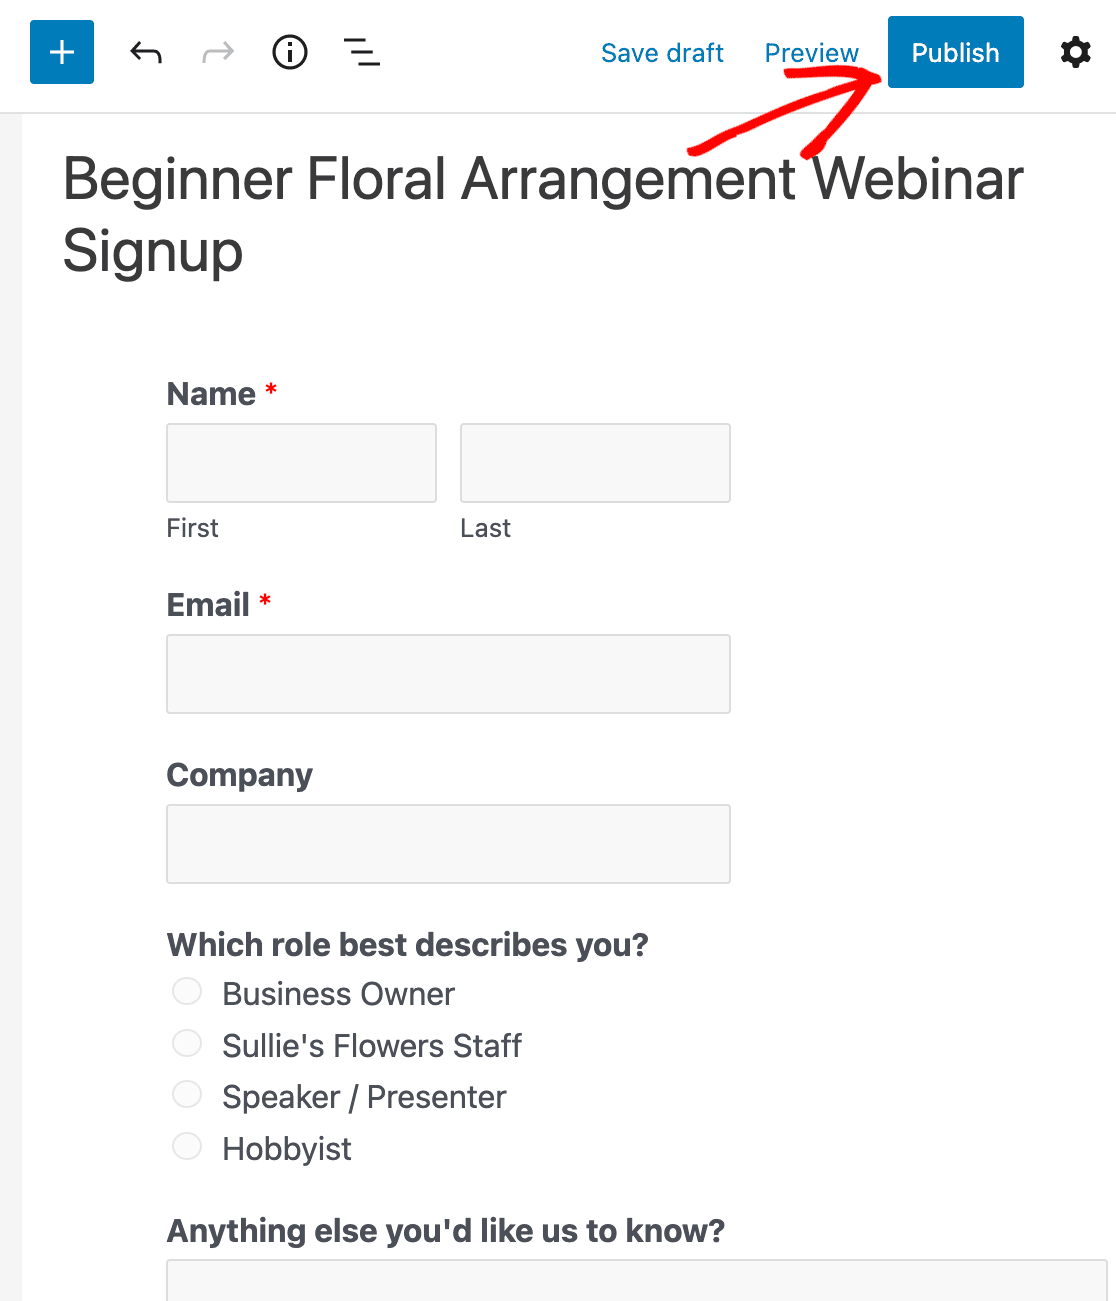 Publishing your webinar registration form